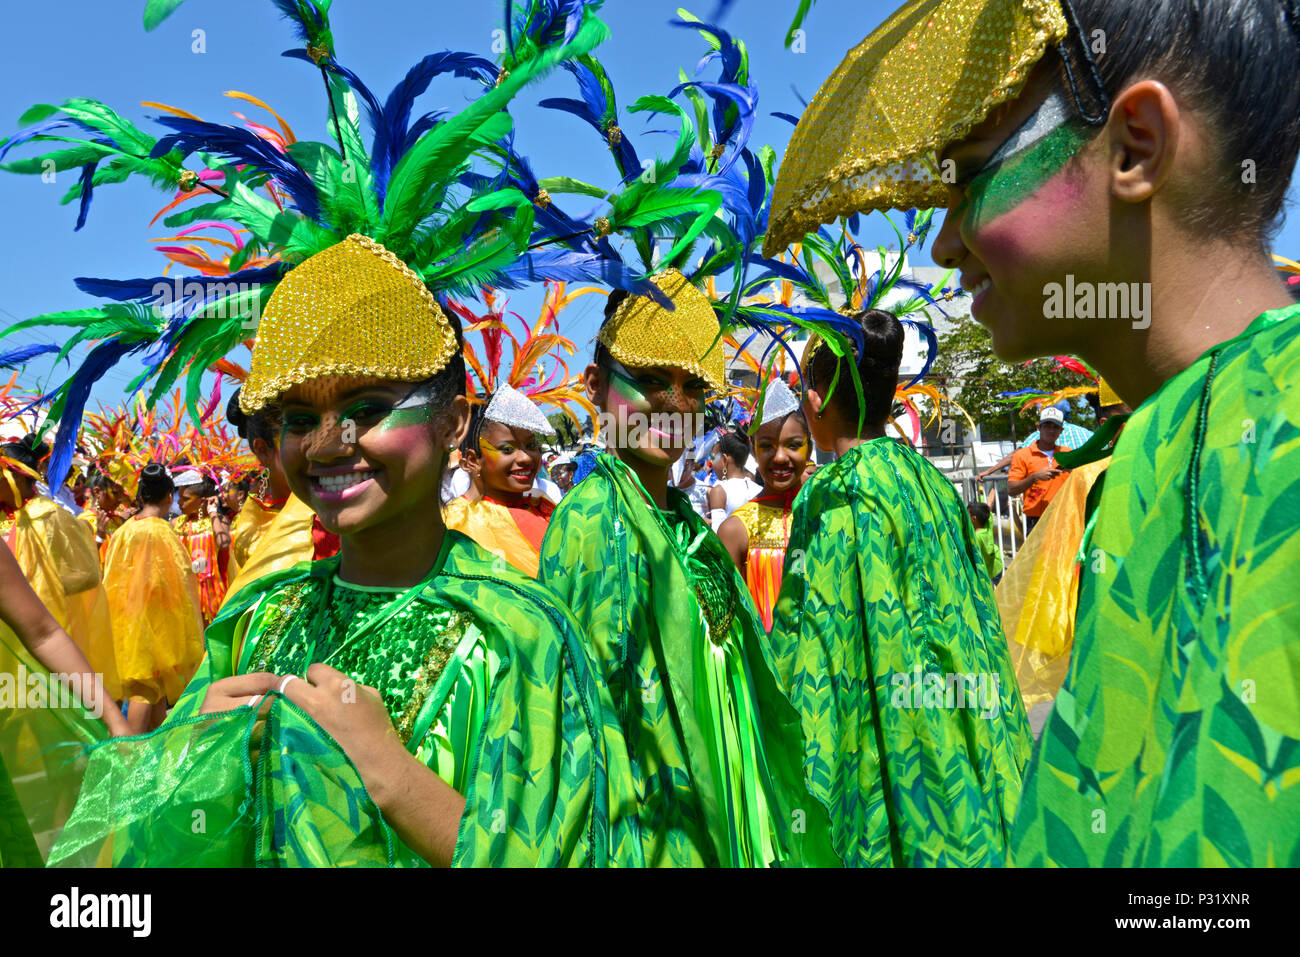 Ritmo del Pajarito (Bird's Rhythmus). Schlacht von Blumen, Barranquilla Karneval. Stockfoto